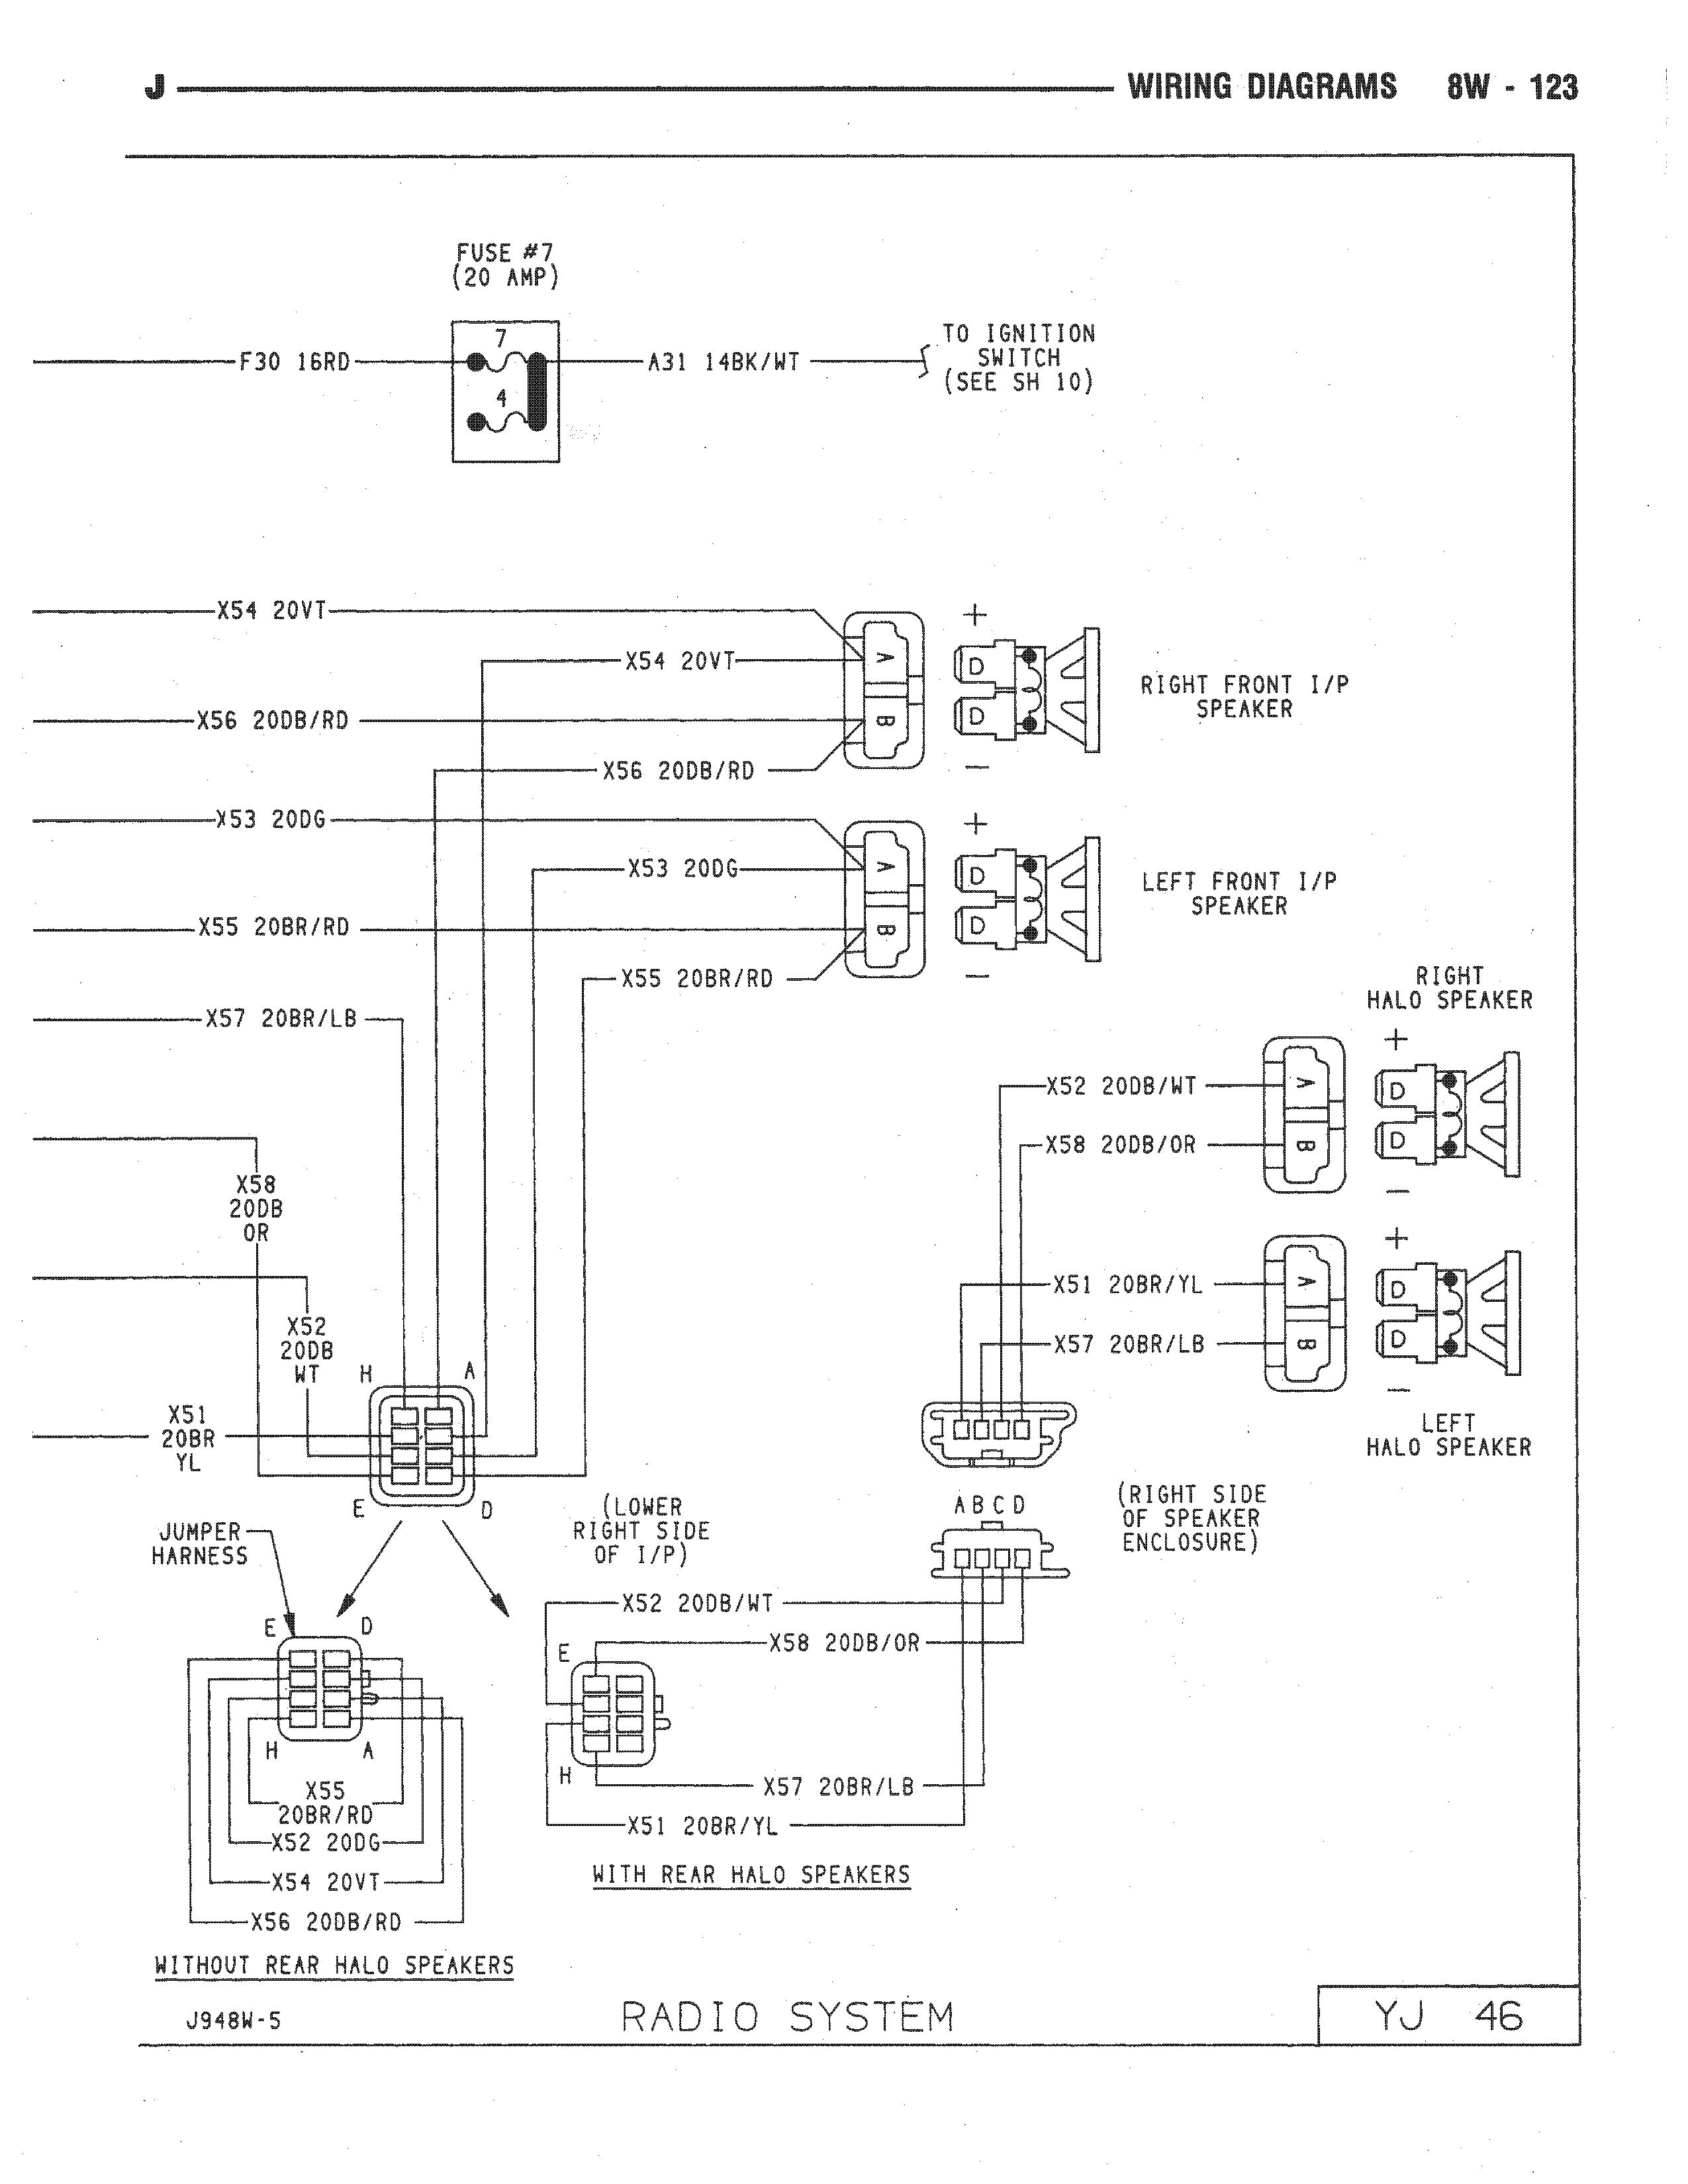 2010 jeep radio wiring diagram wiring diagram database5 best images of 94 jeep wrangler wiring diagram